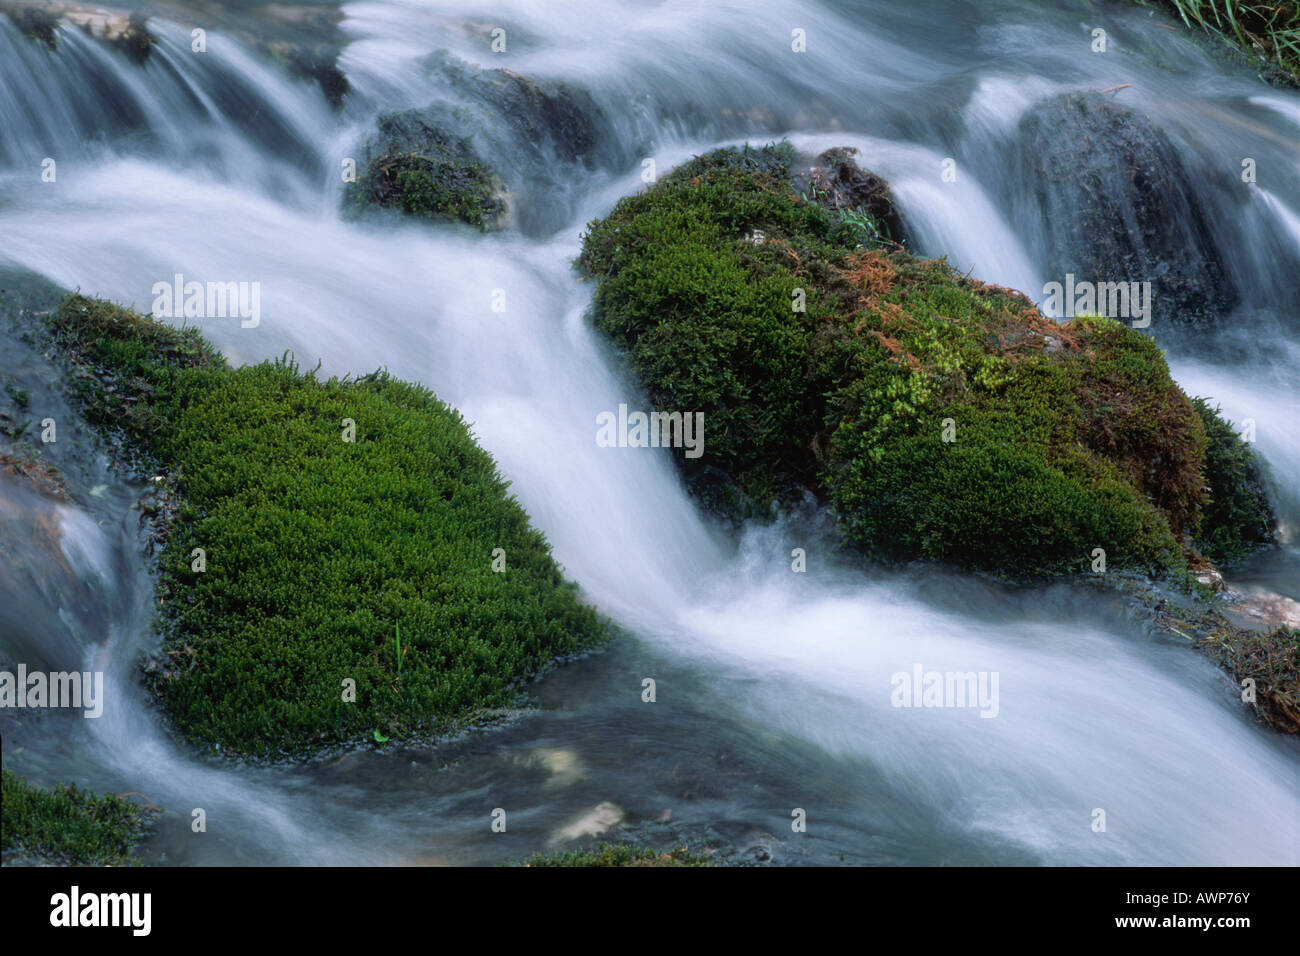 Moss-covered stones in Johannesbach stream, North Tirol, Austria, Europe Stock Photo